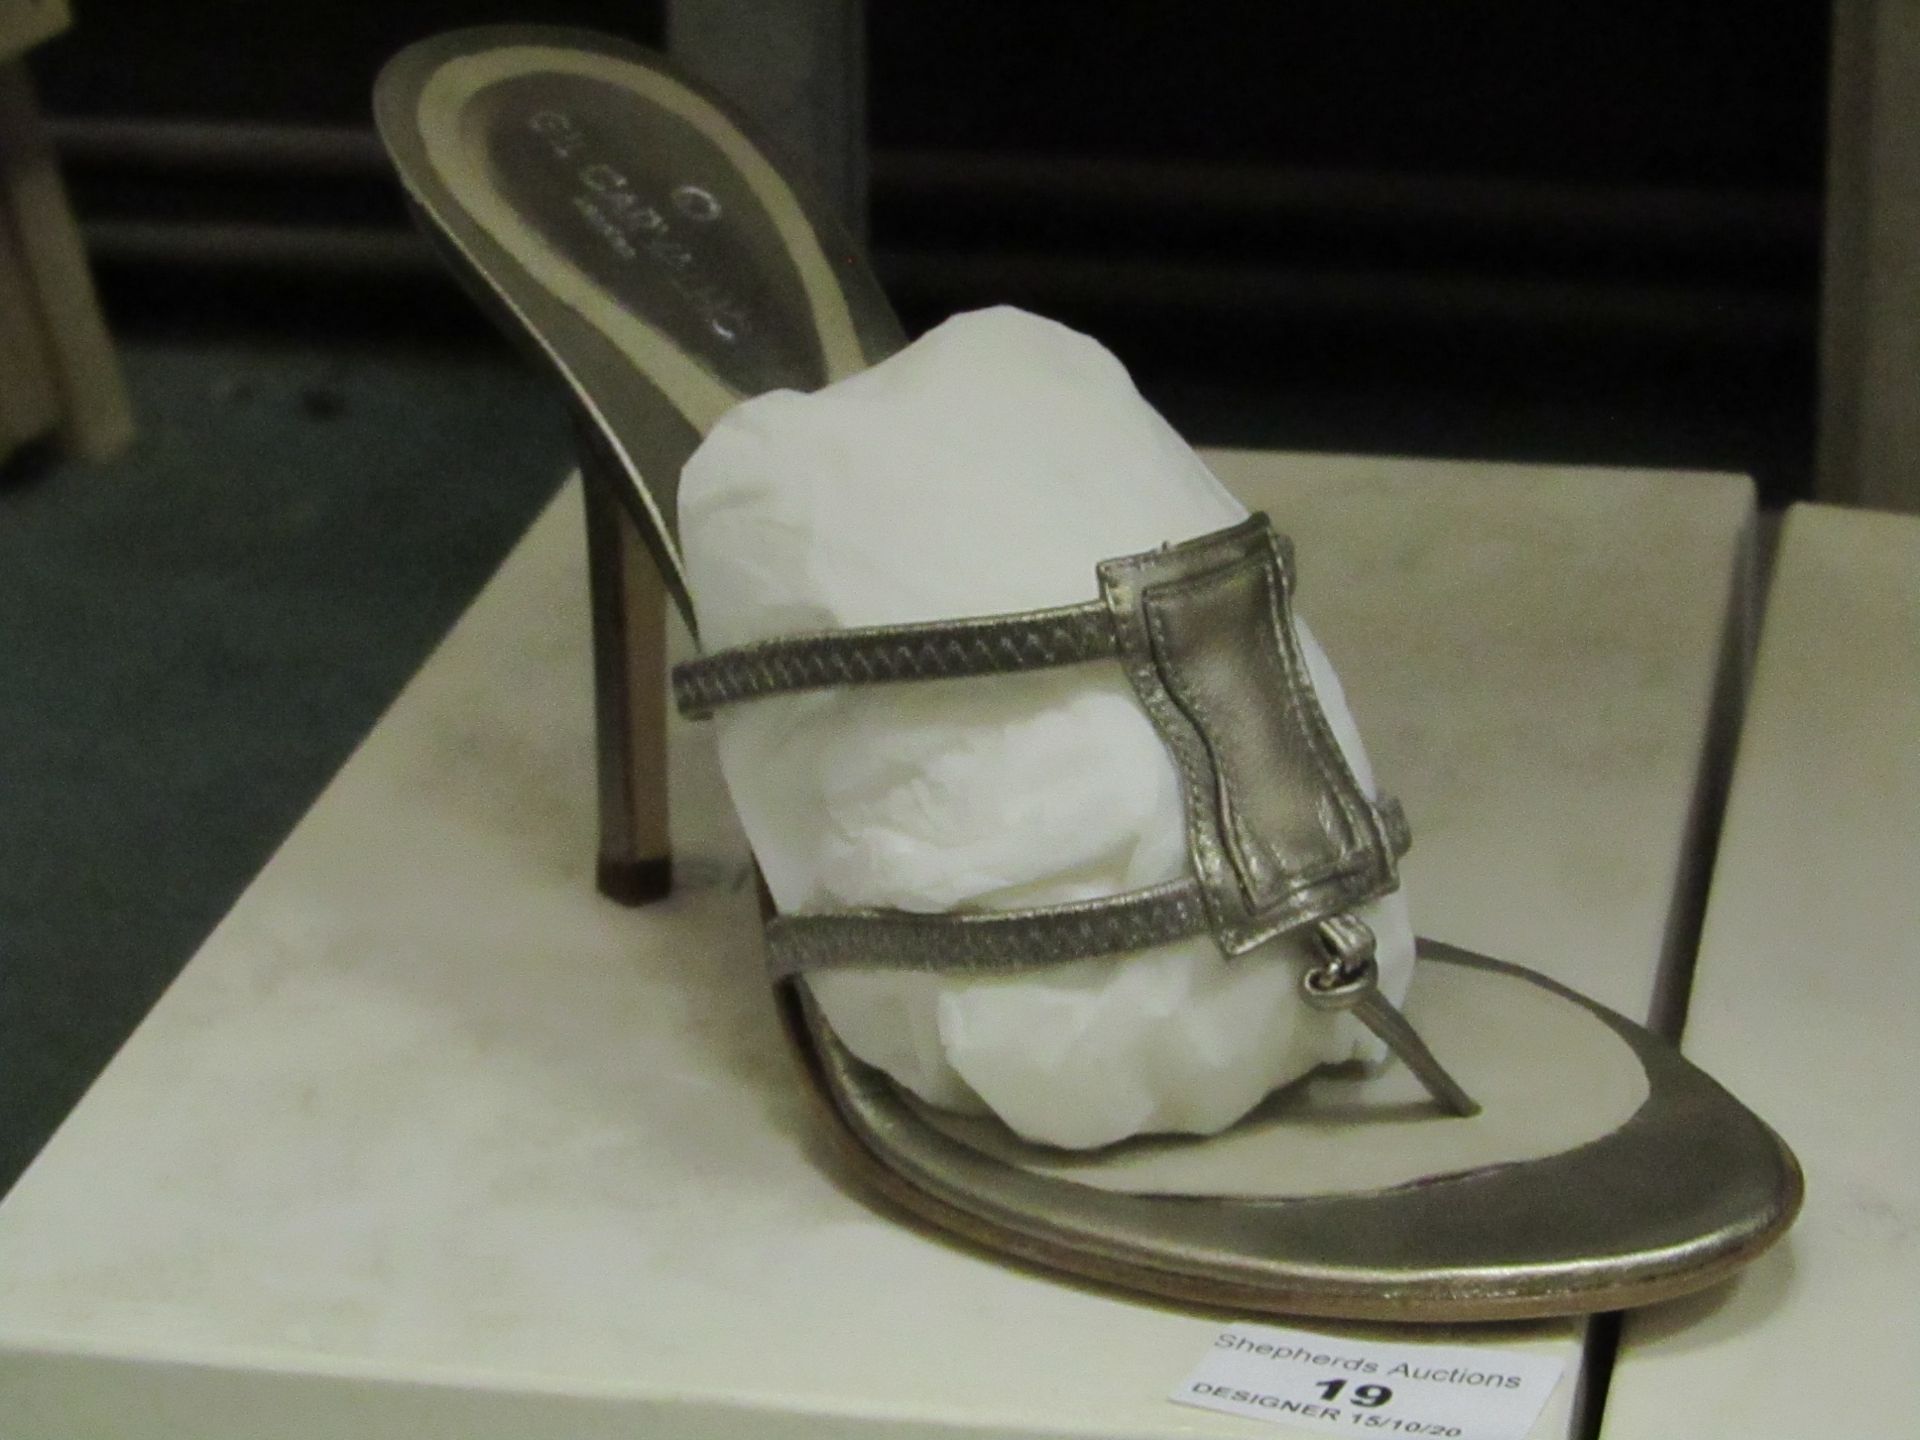 Gil Carvalho heels, size EU38, boxed.